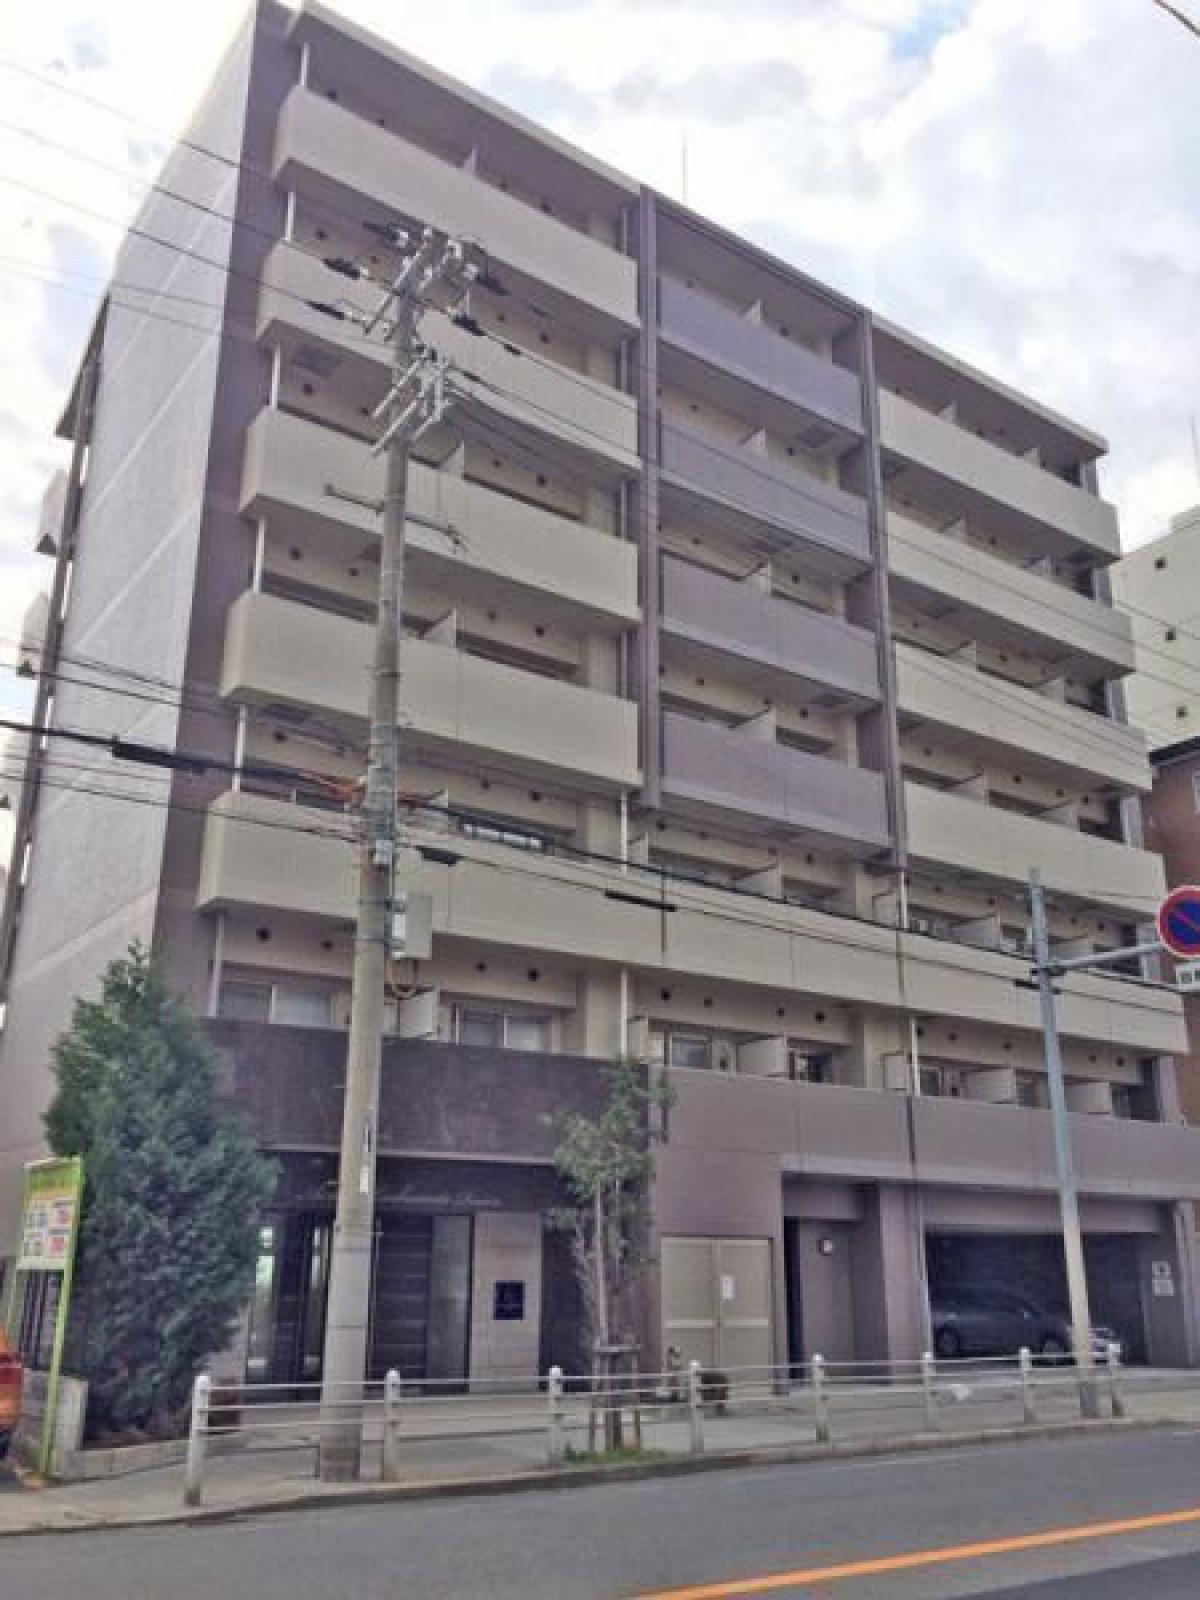 Picture of Apartment For Sale in Osaka Shi Nishiyodogawa Ku, Osaka, Japan